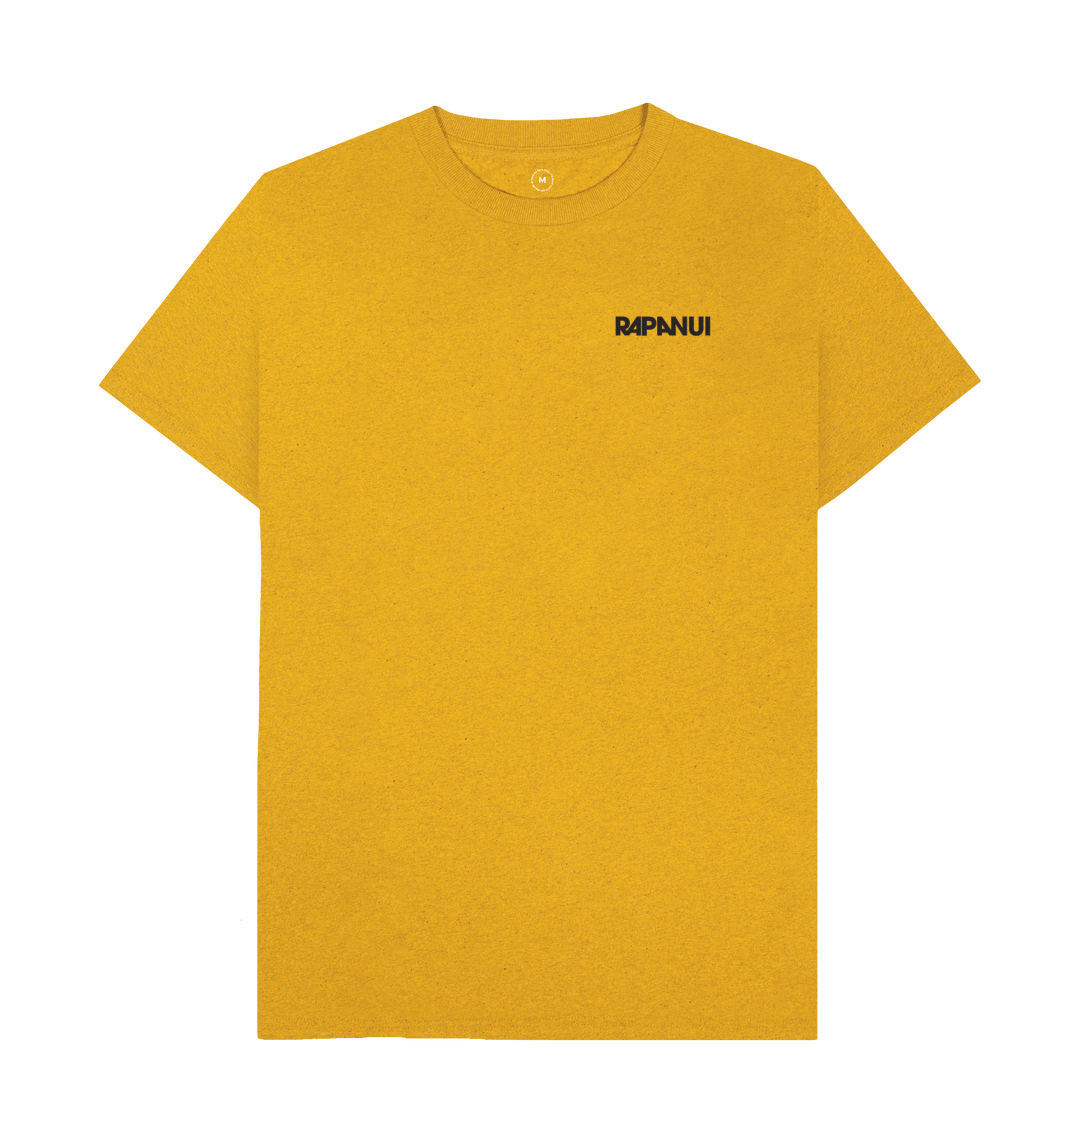 Recycled Rapanui logo T-shirt